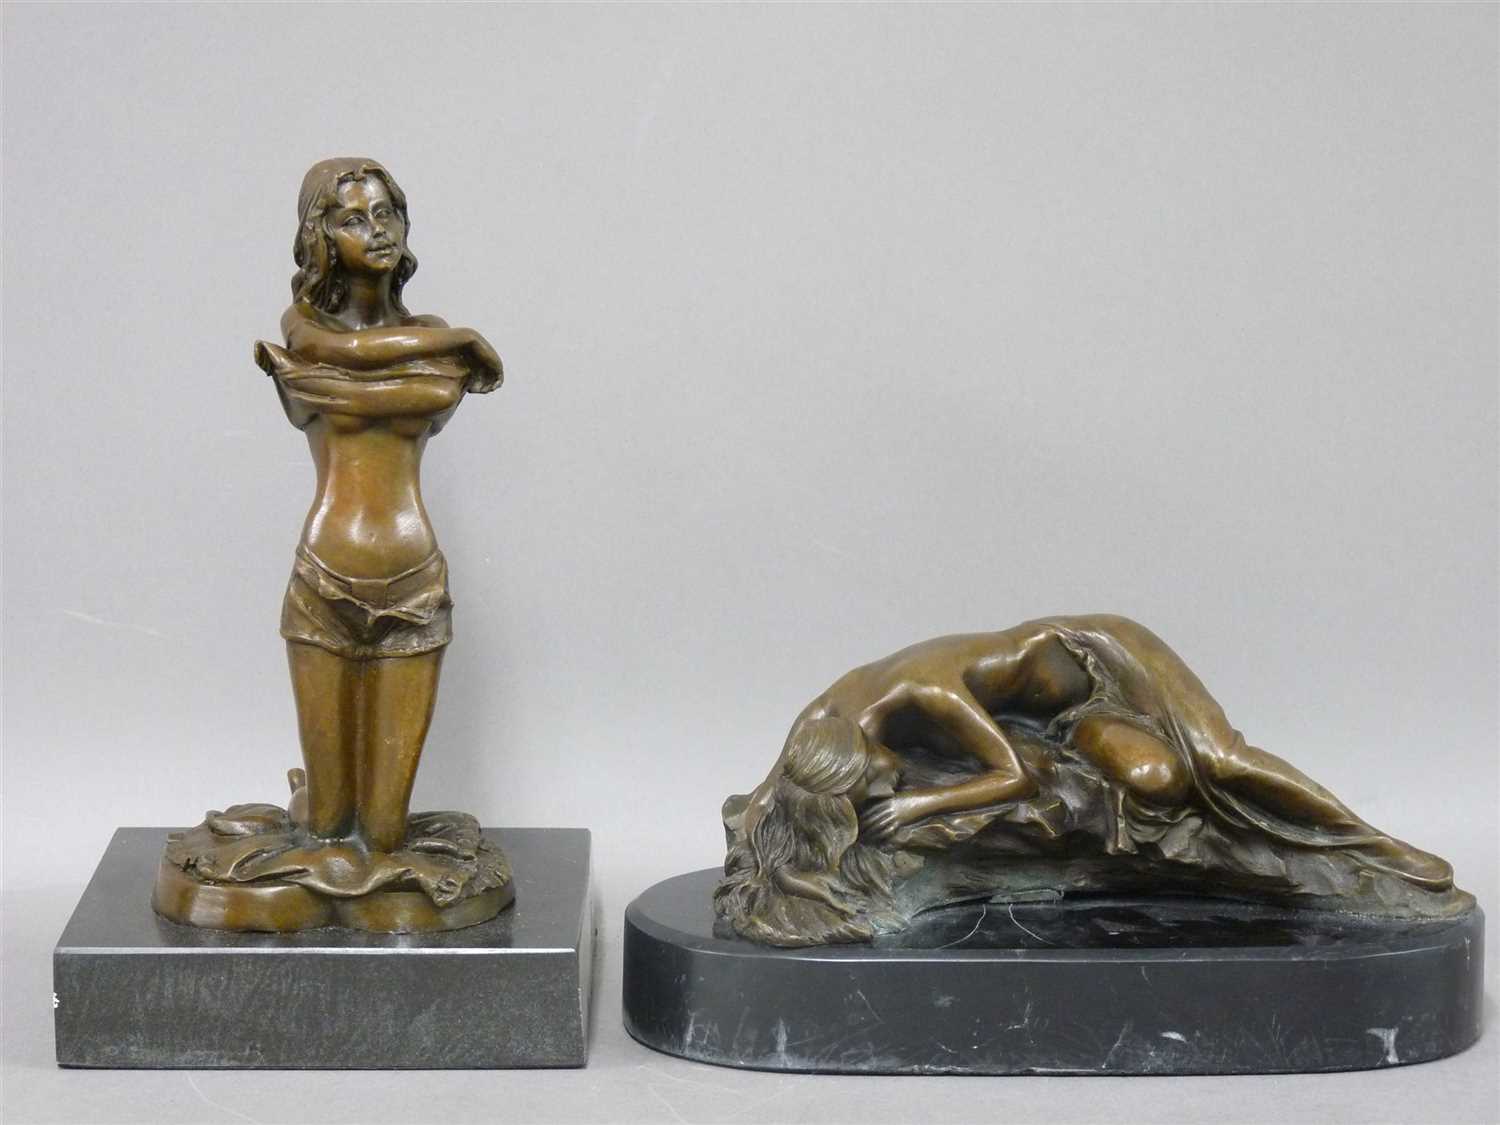 Lot 209 - Two reproduction bronze semi-clad figures